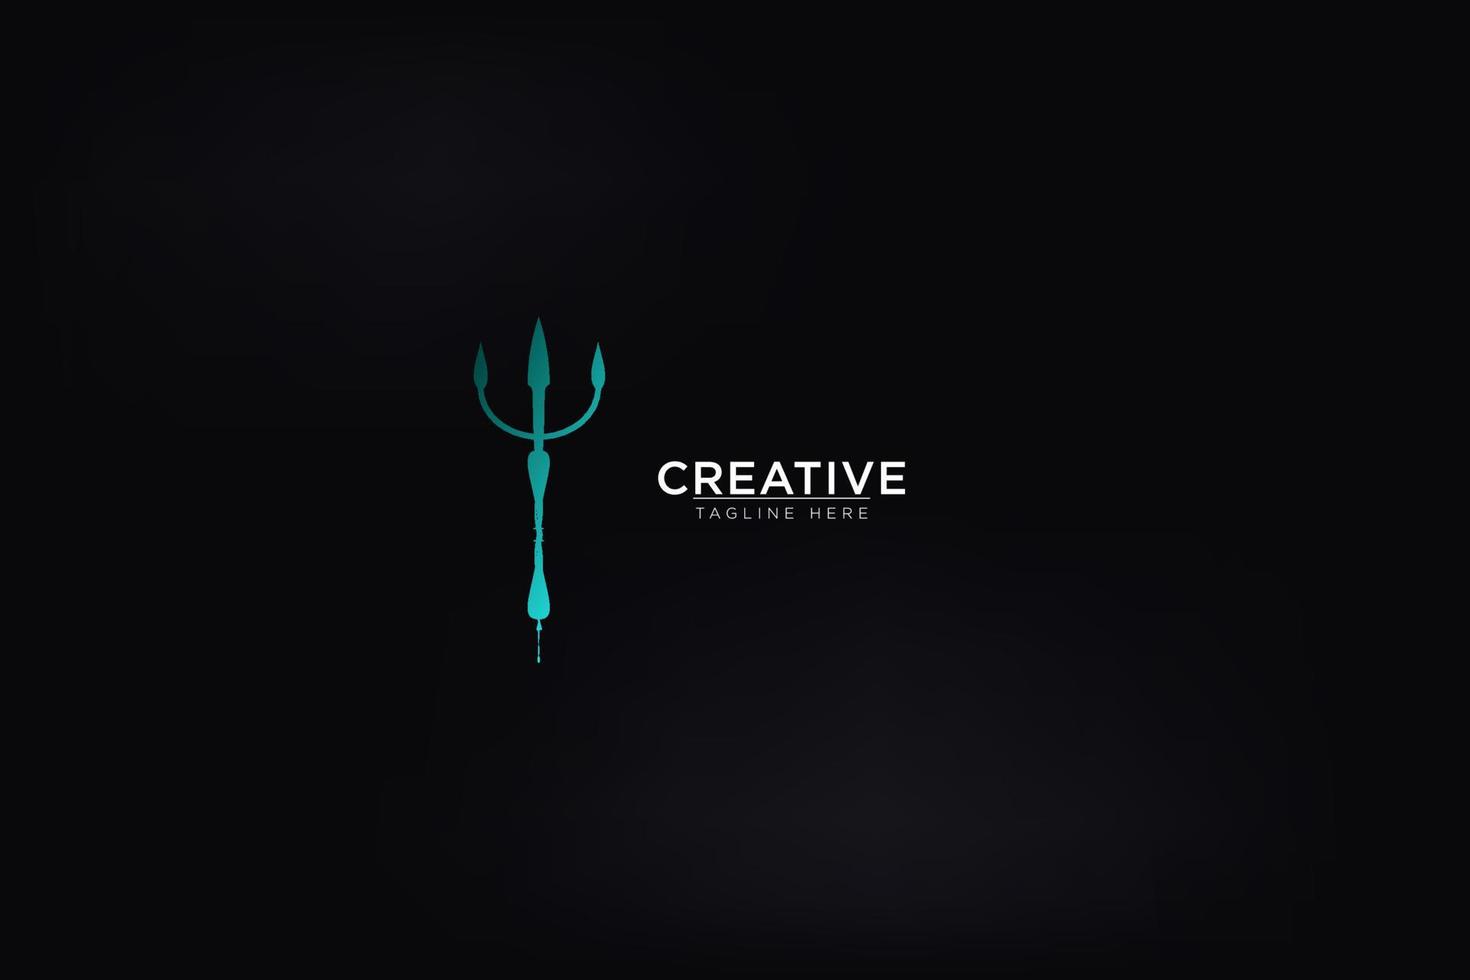 Vintage Trident Spear of Poseidon Neptune God Triton King logo design vector